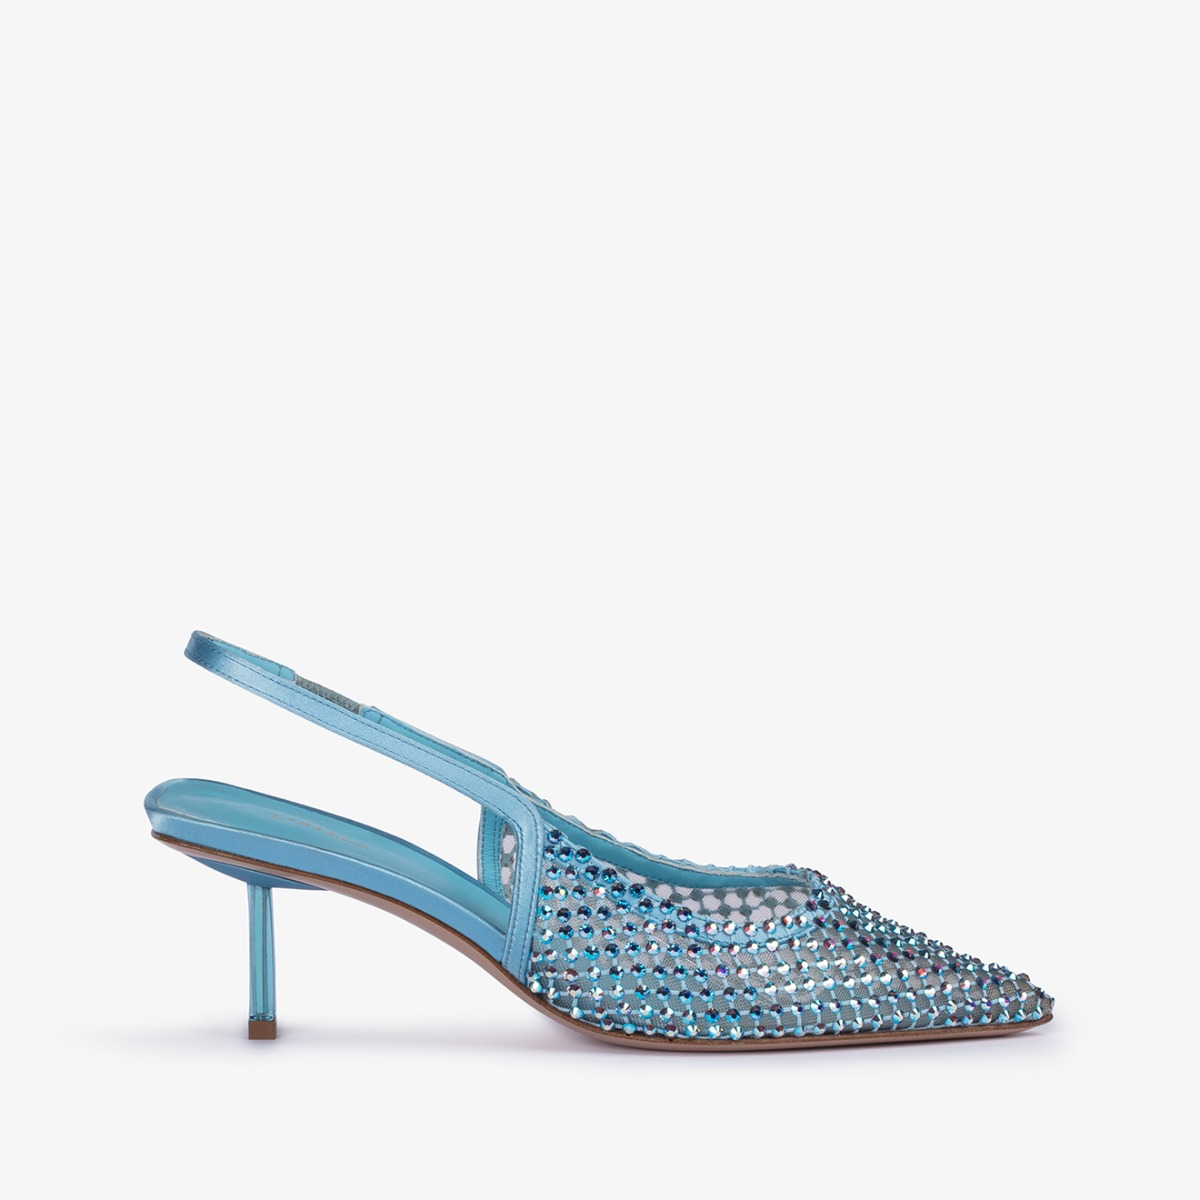 Pumps and wedding sandals | Le Silla shoes